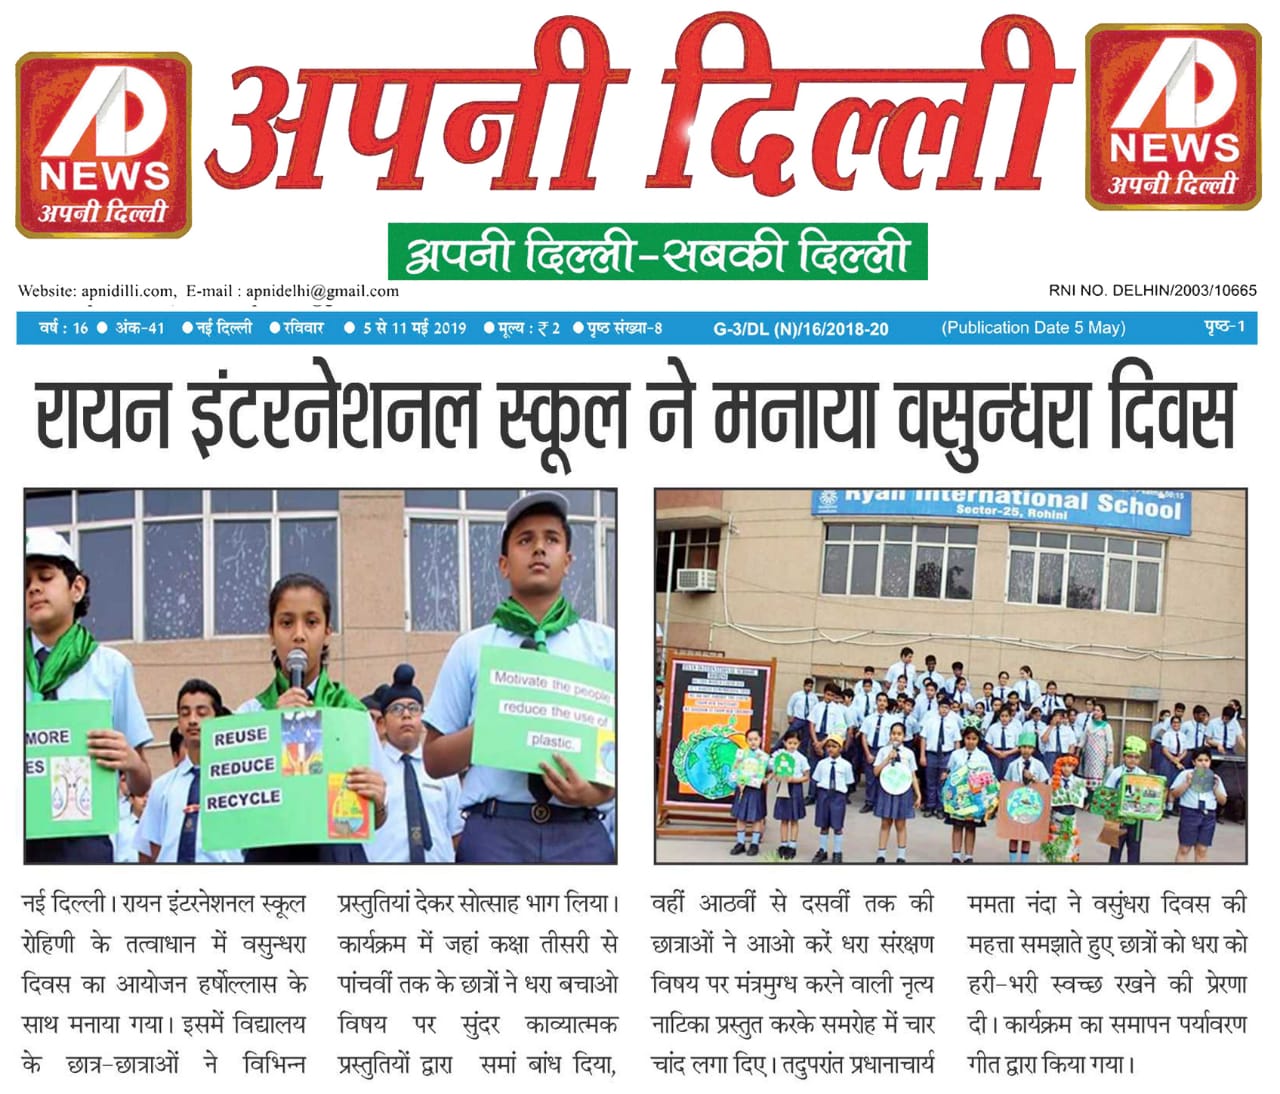 Earth Day Celebrations - Ryan International School, Sec-25, Rohini